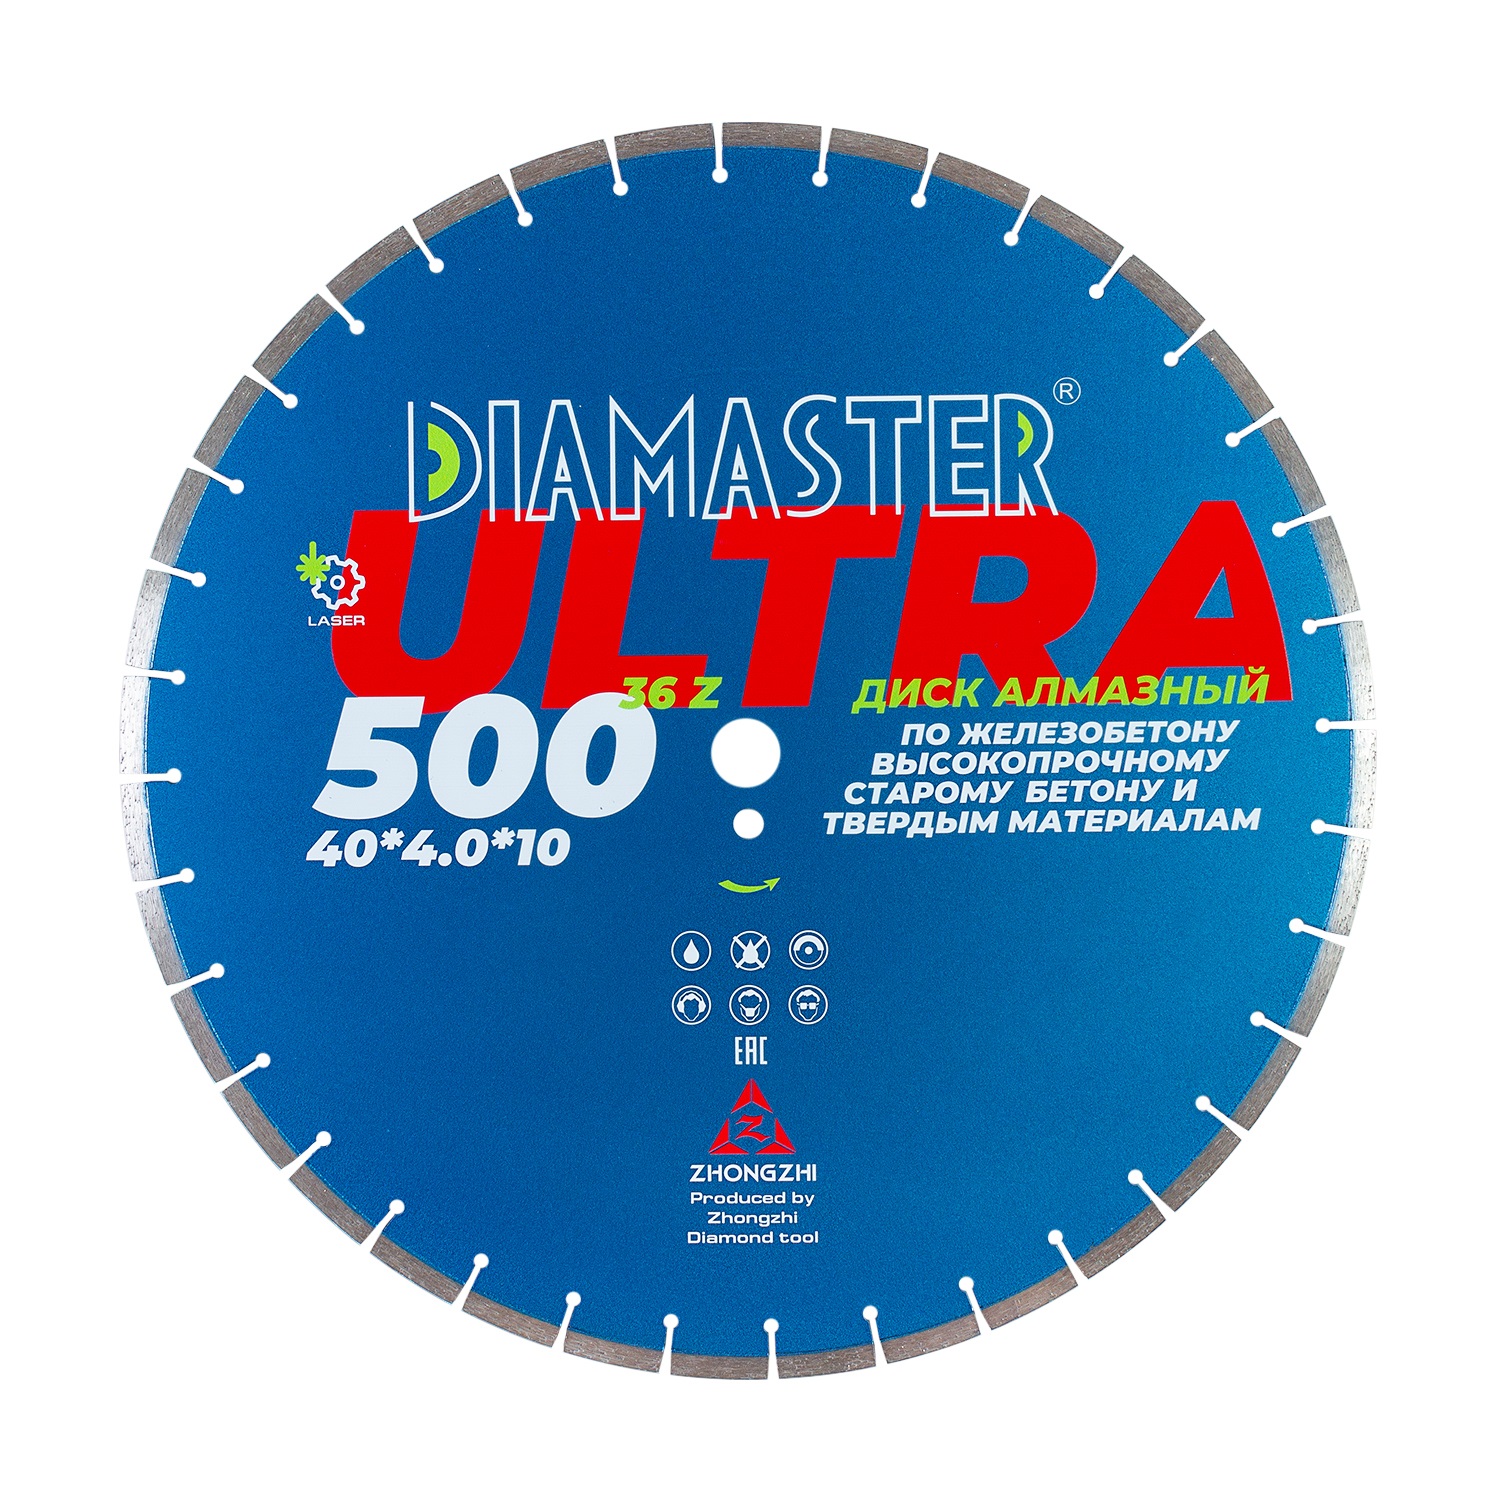 Диск сегментный Laser ULTRA д.500*2,8*25,4 (40*4,0*10)мм | 36z/железобетон/wet/dry DIAMASTER диск турбо wave gold д 230 22 2 2 8 7 мм универсал dry diamaster